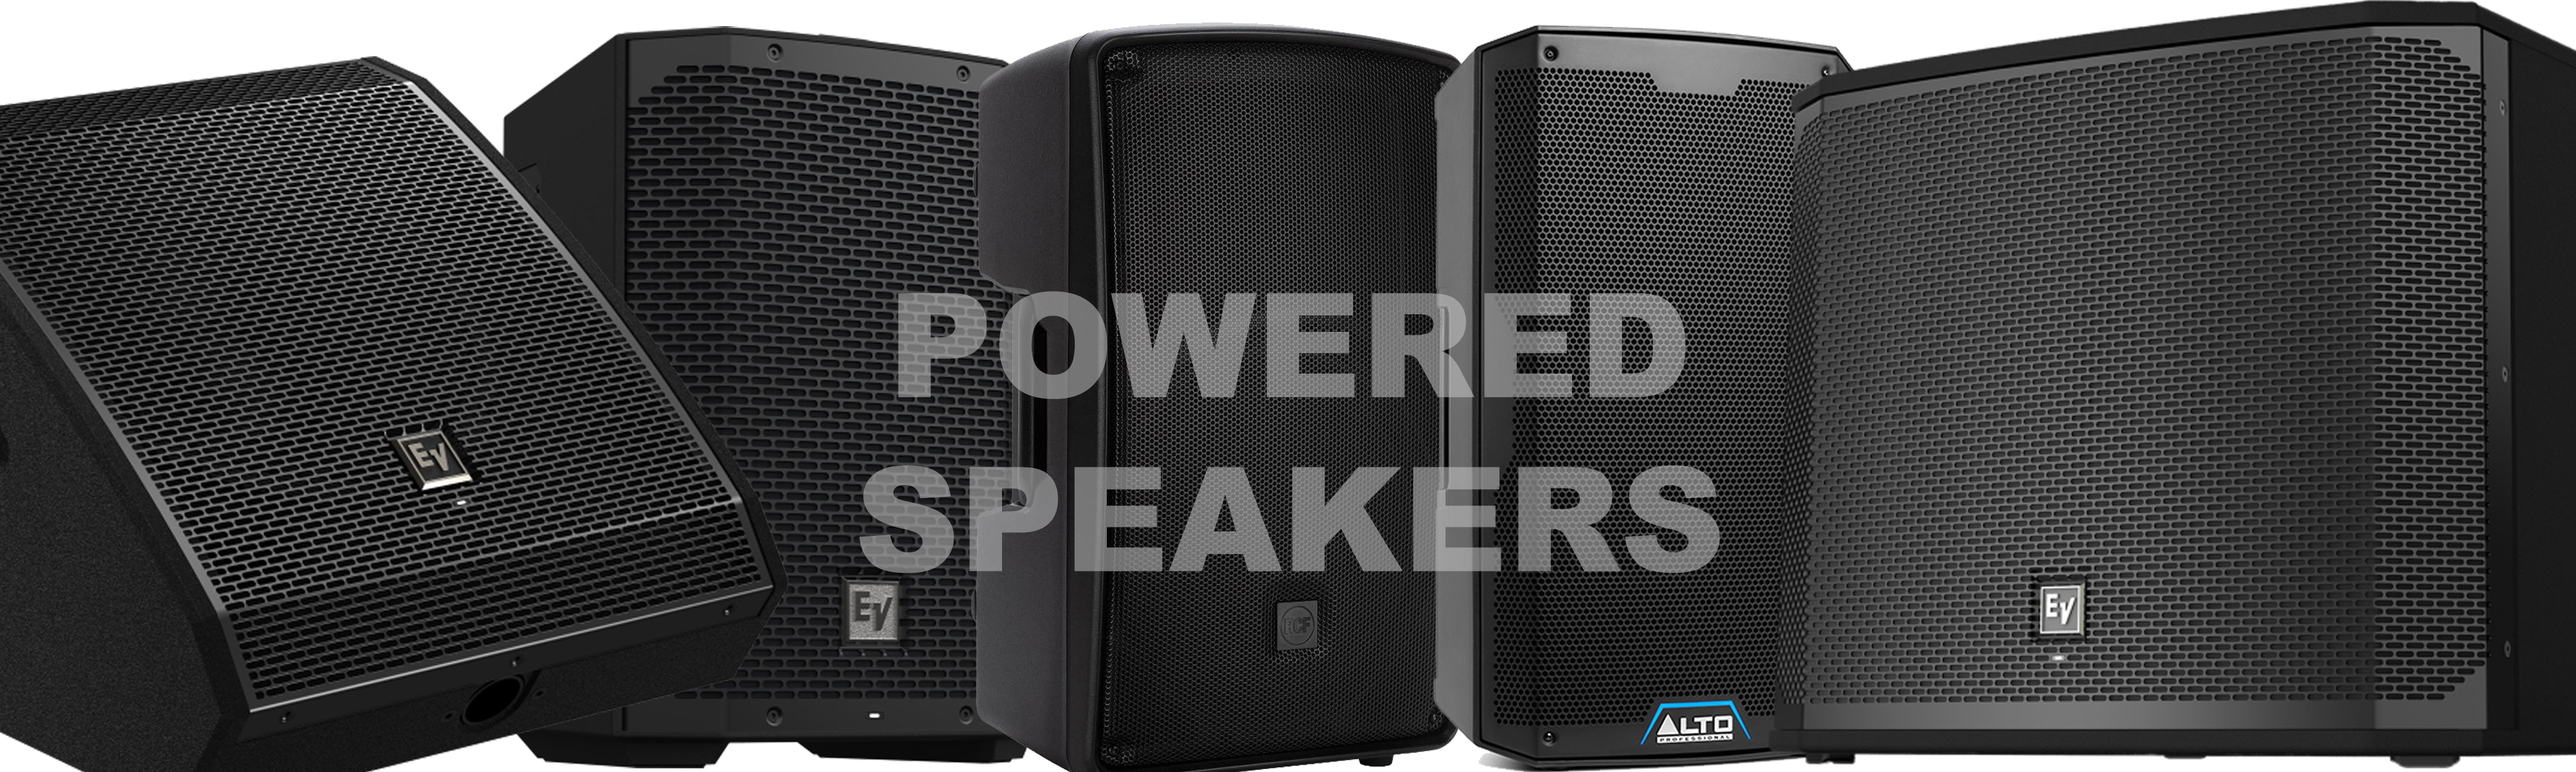 Powered Speakers